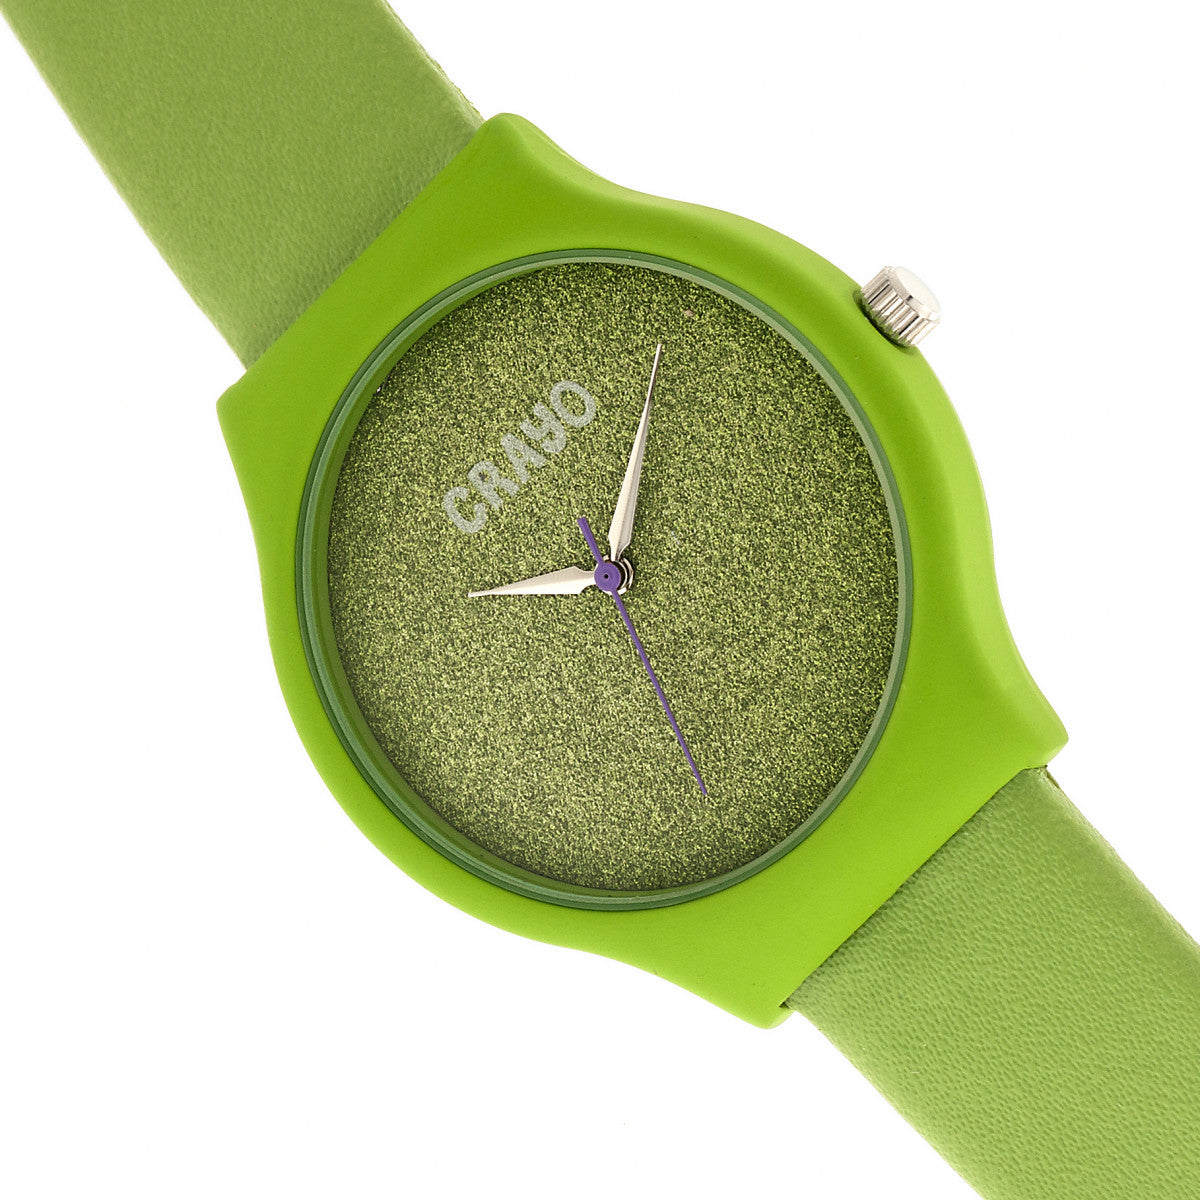 Crayo Glitter Unisex Watch - Green - CRACR4503